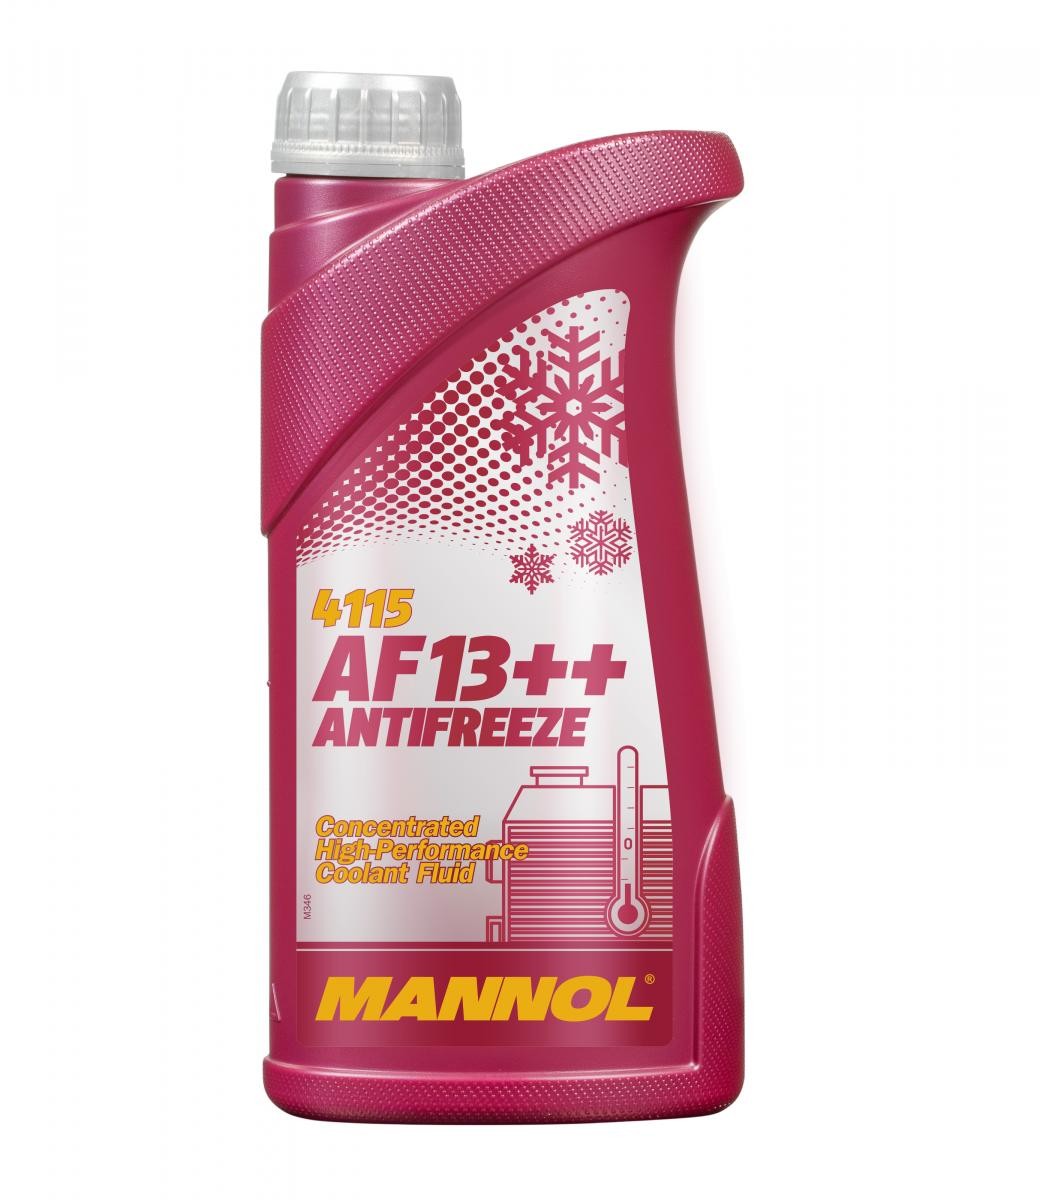 MANNOL AF13++, High-performance MN4115-1 GENERIC Kühlmittel Motorrad zum günstigen Preis